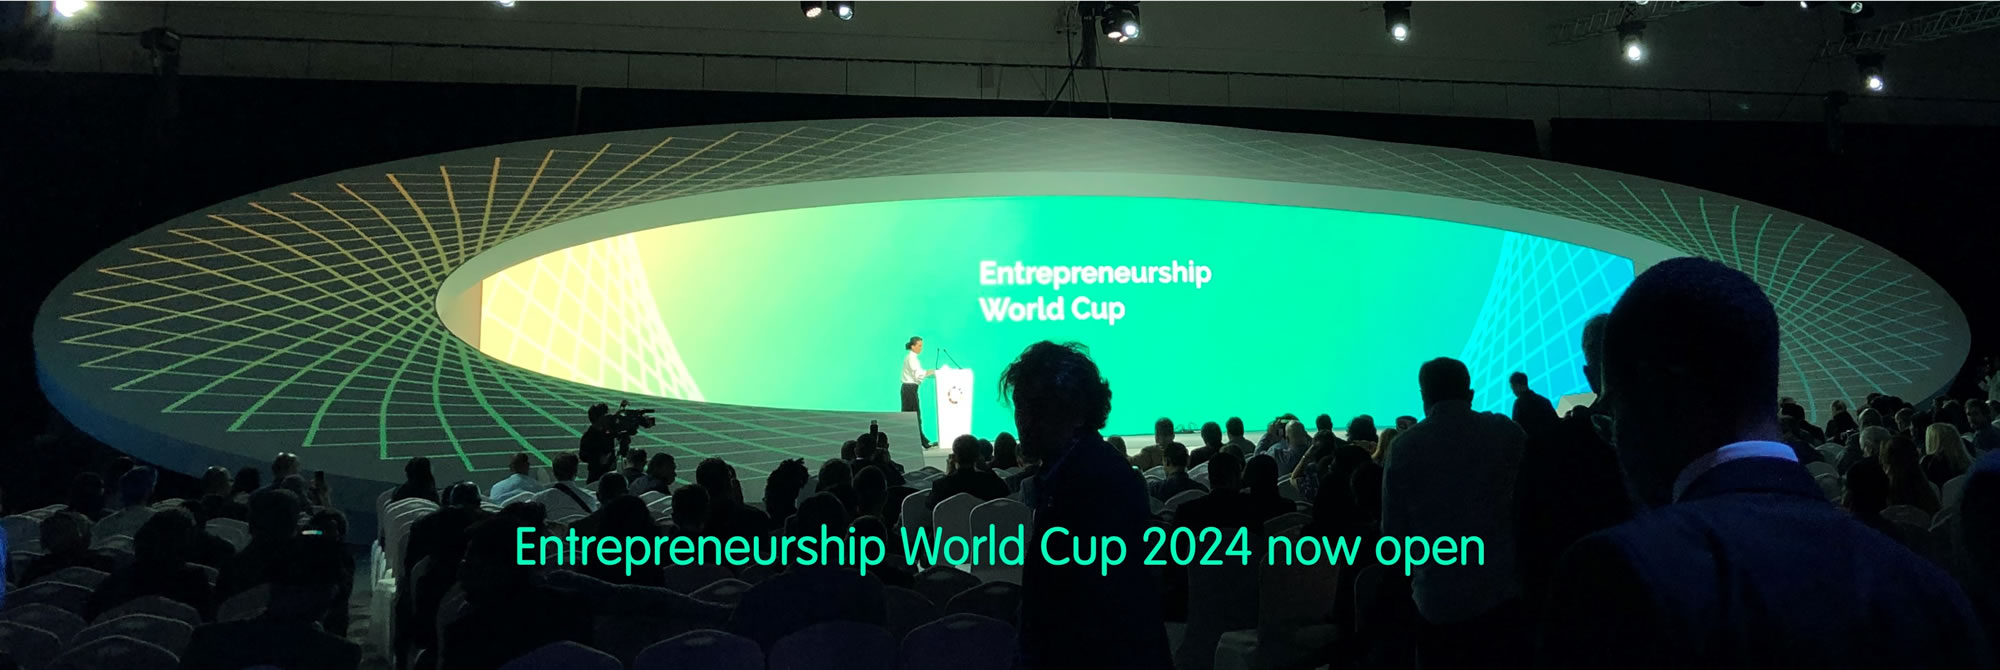 Entrepreneurship world cup 2024